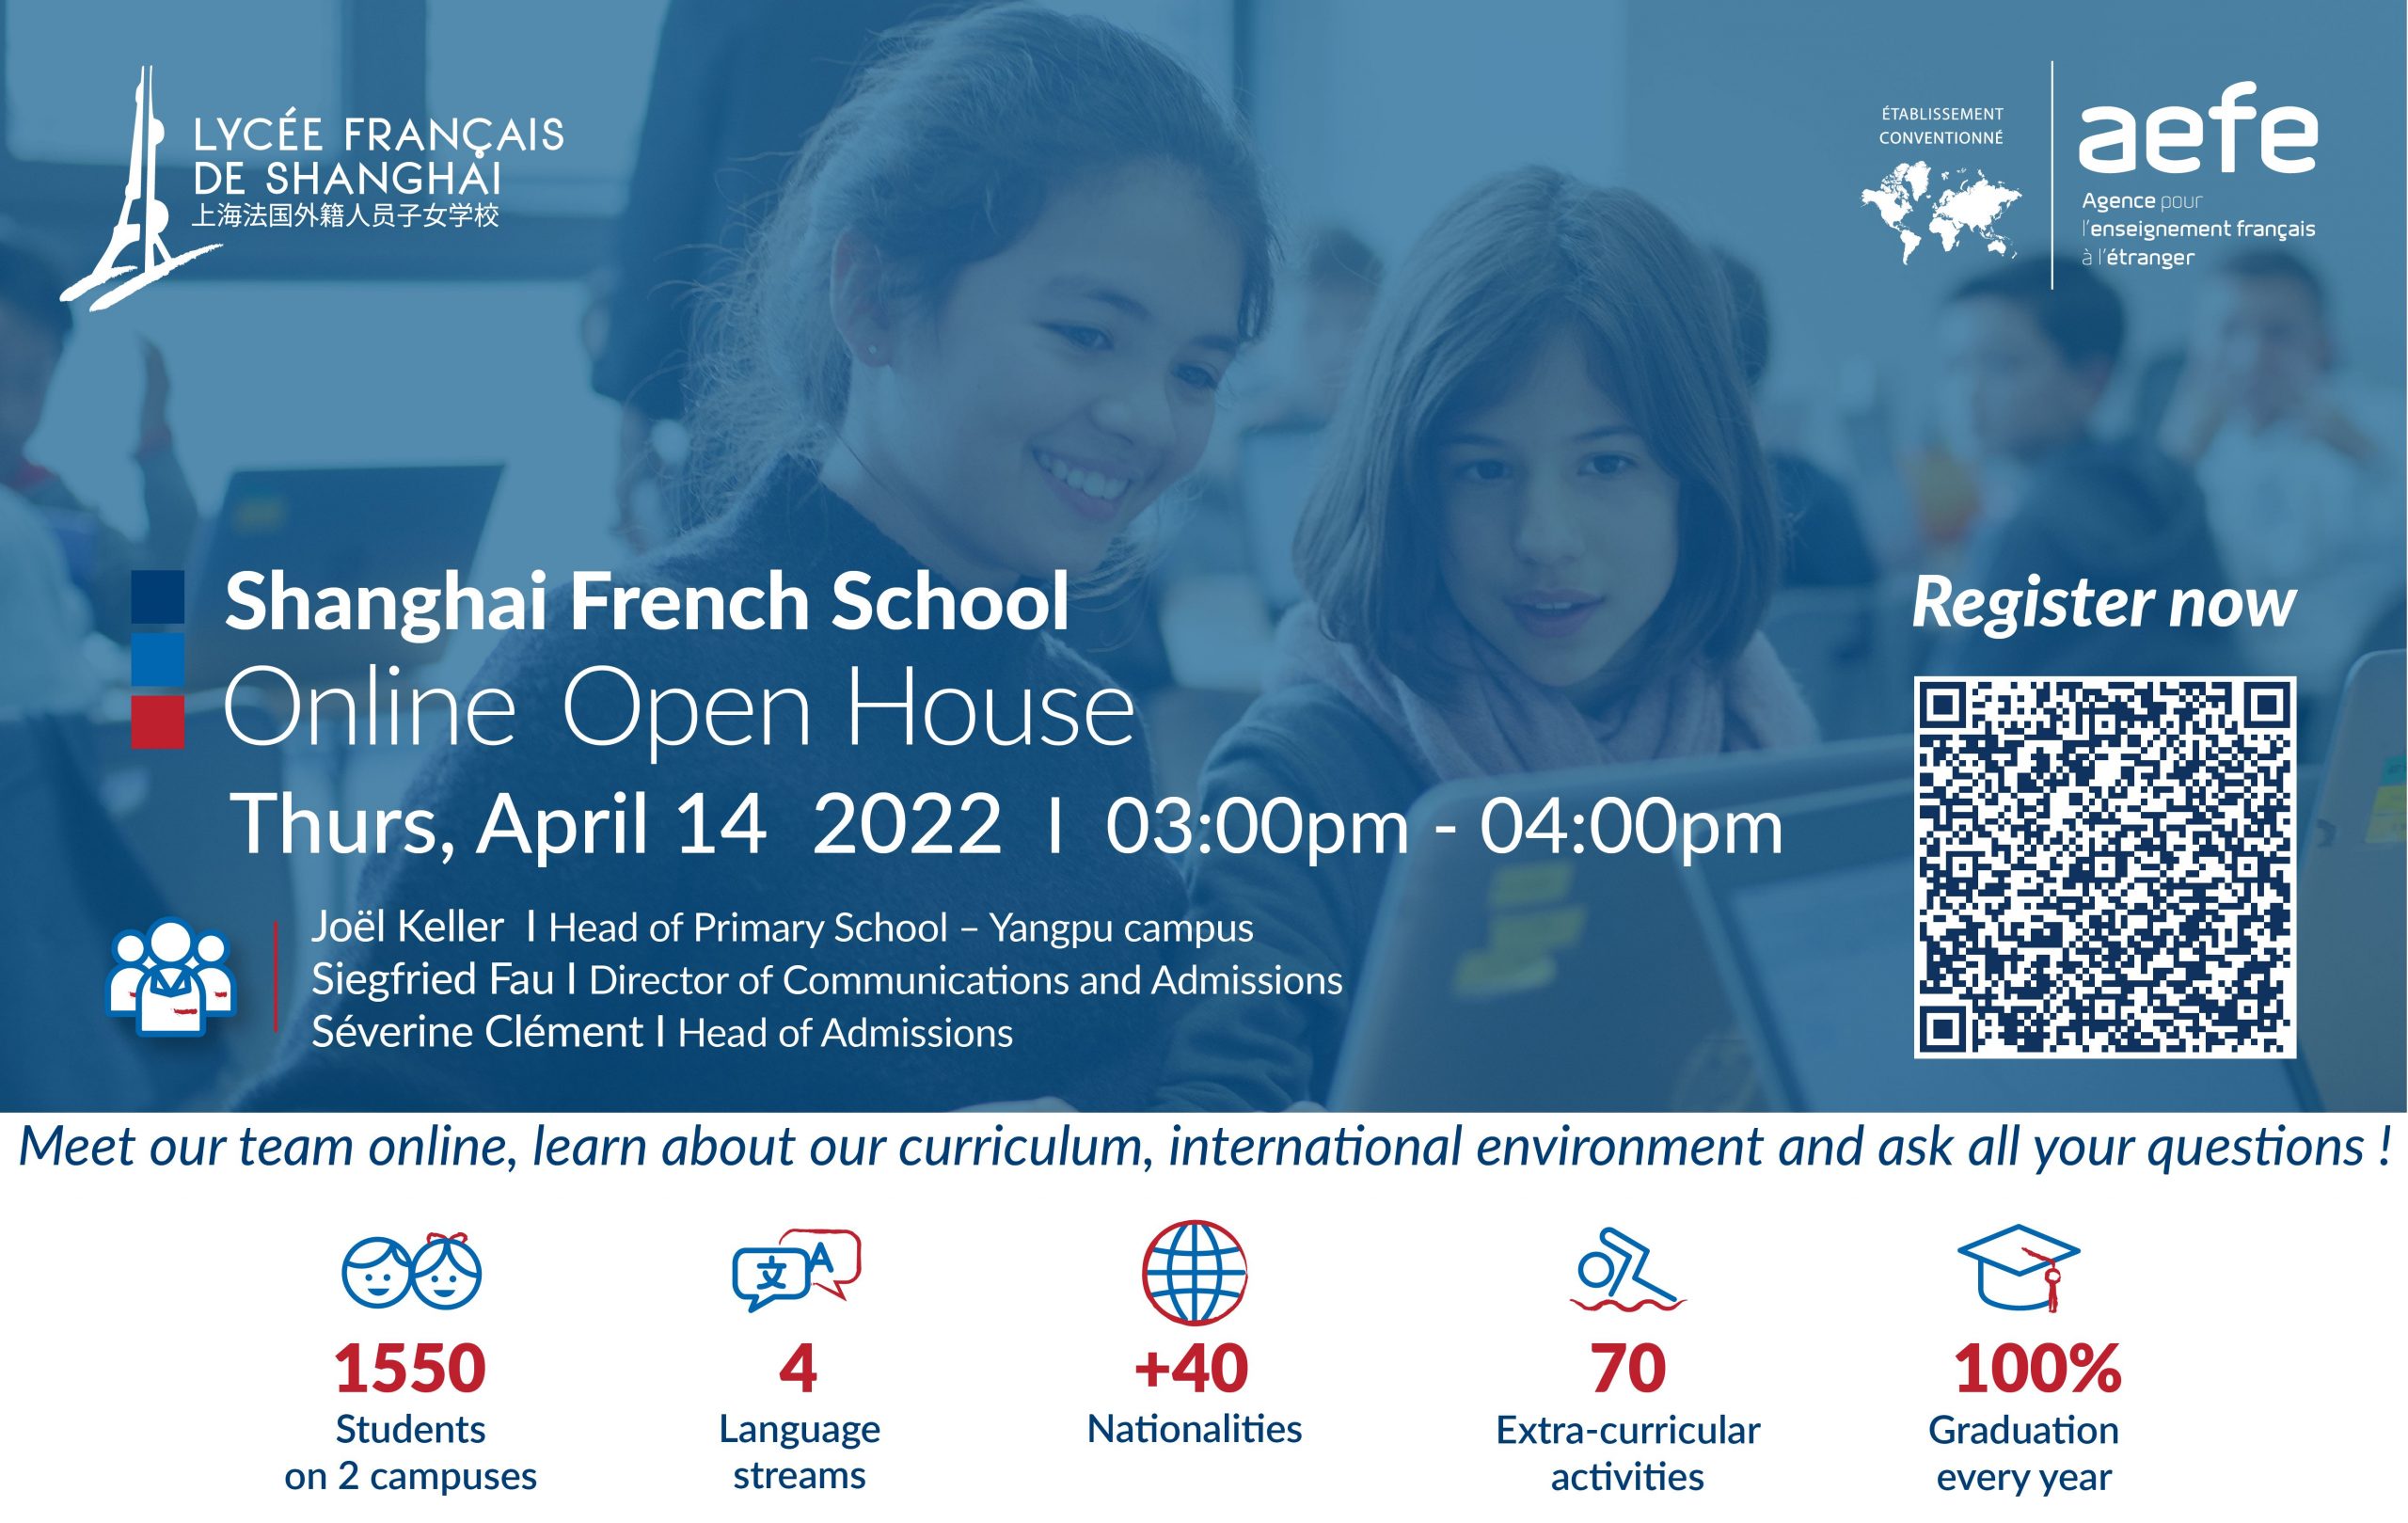 Shanghai French School Online Open House I Thursday, April 14 at 300 p.m